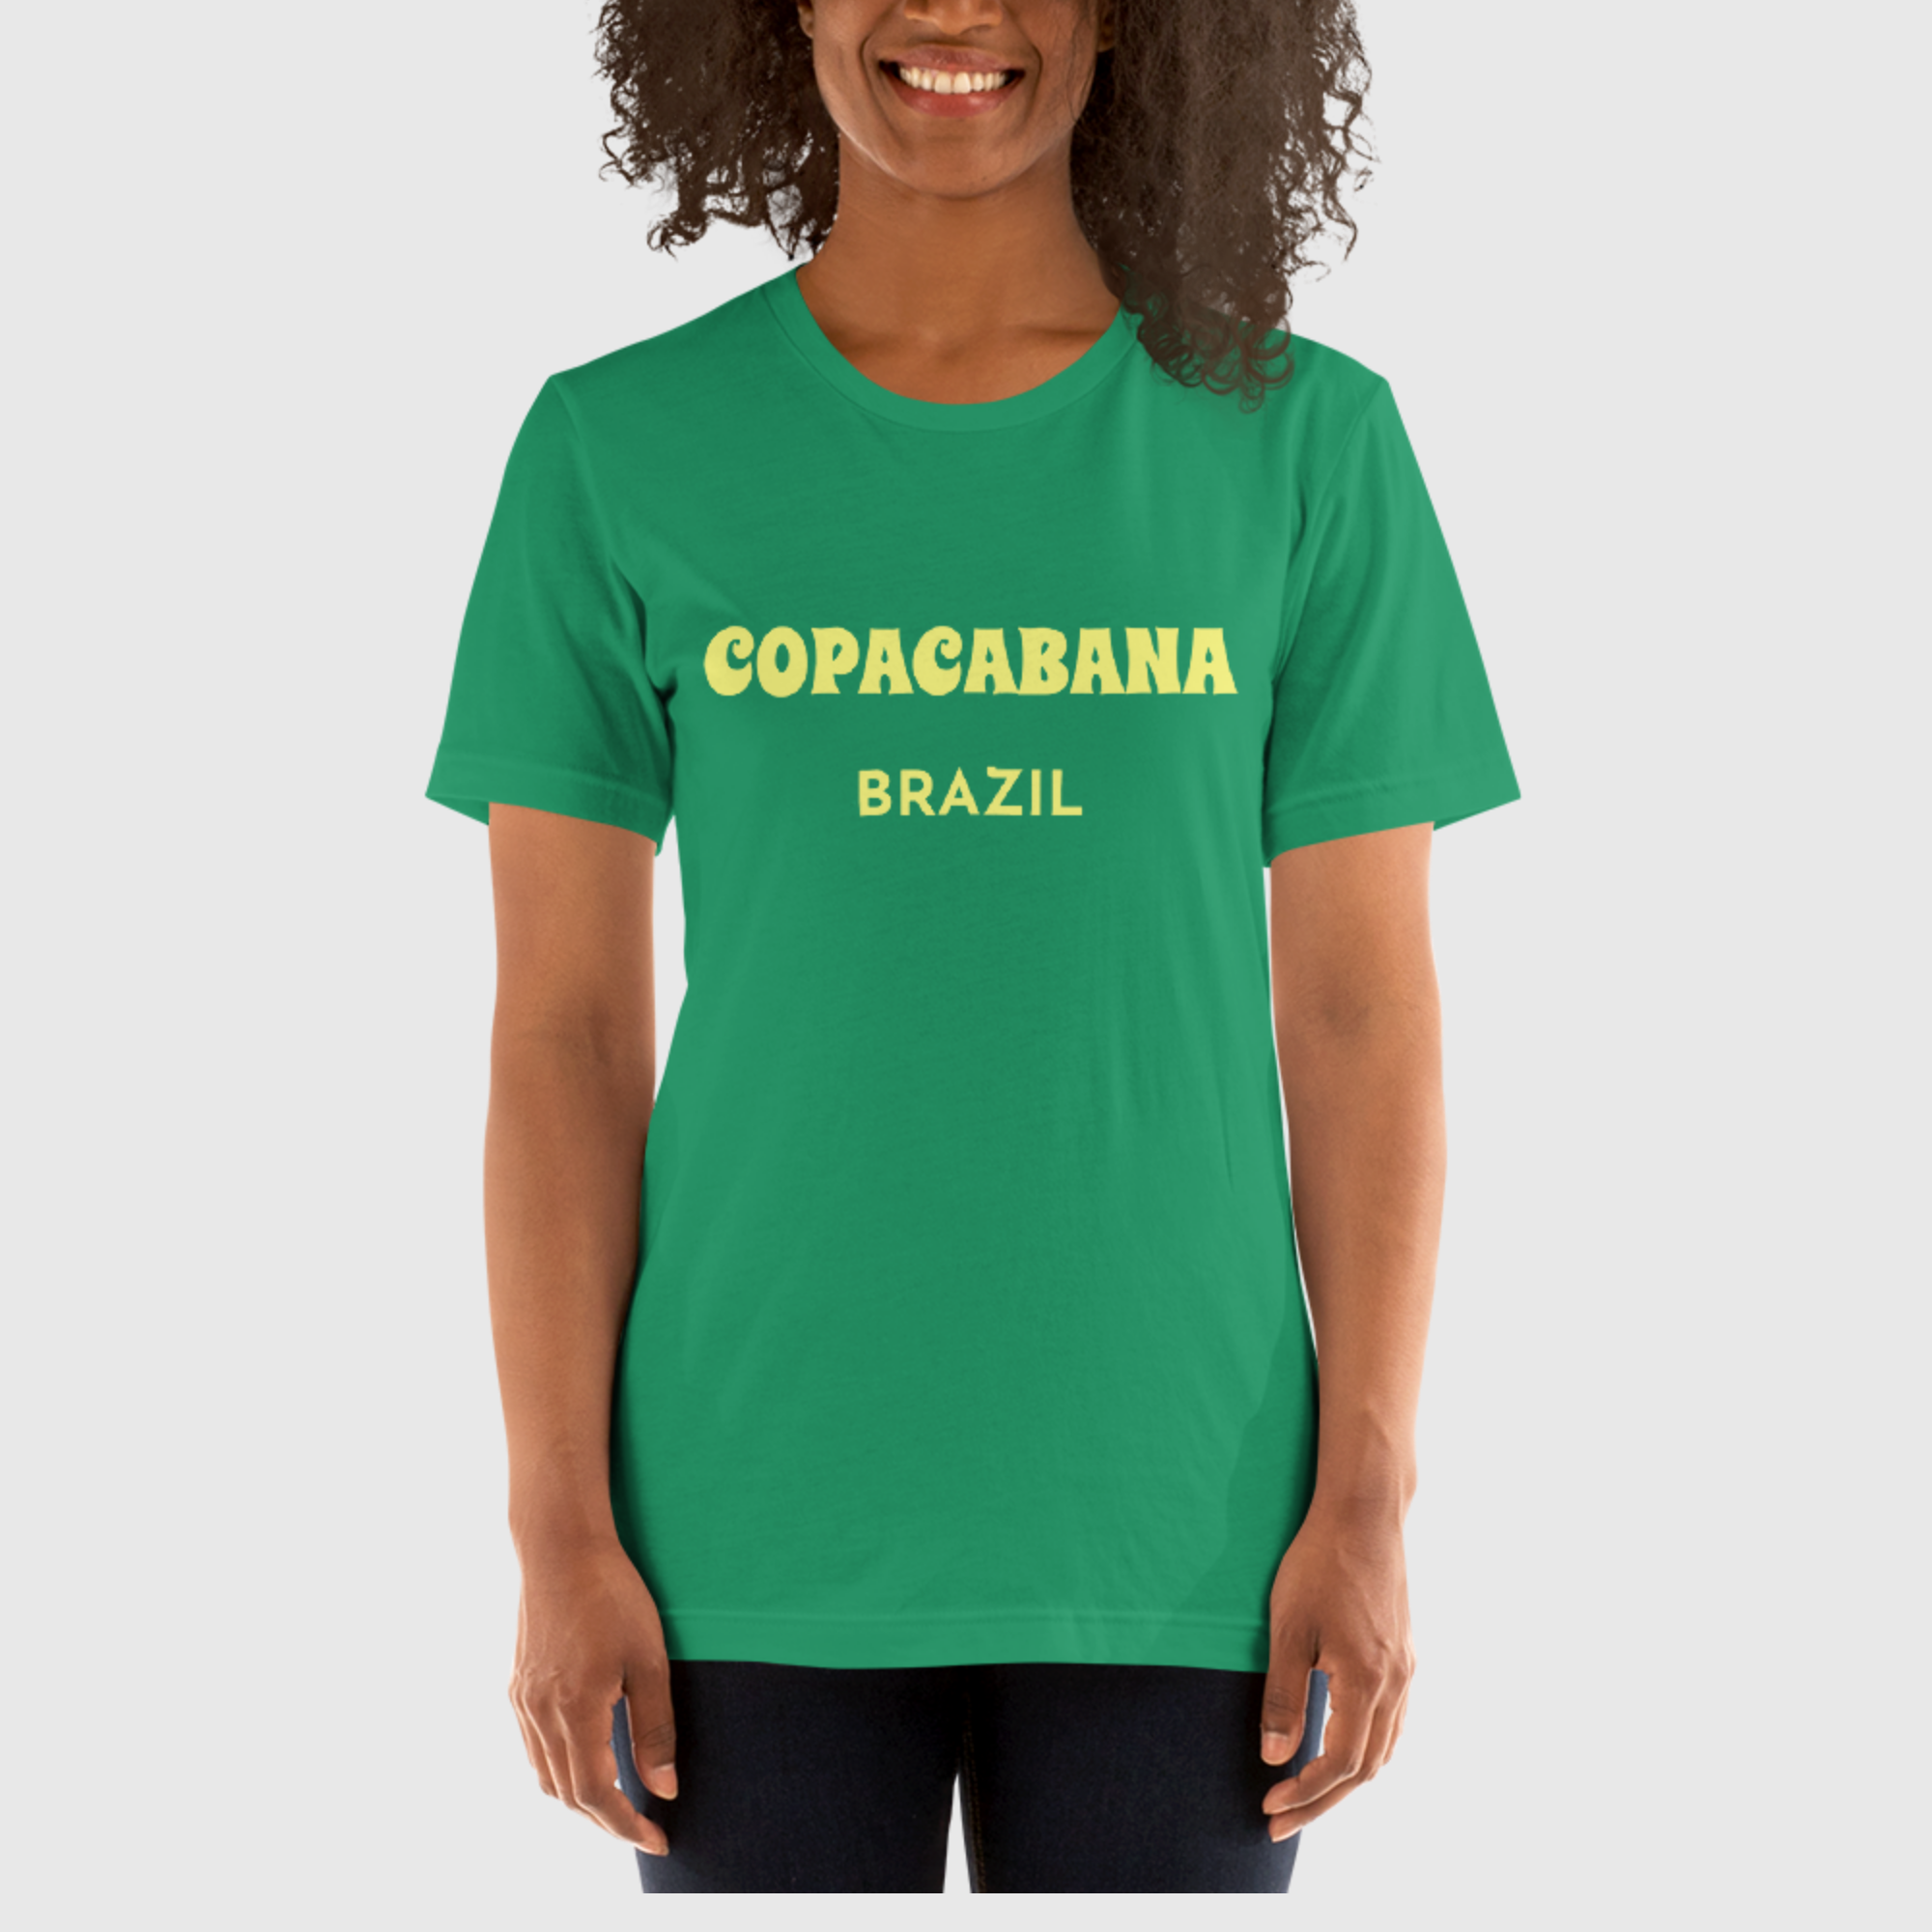 Unisex t-shirt - Copacabana